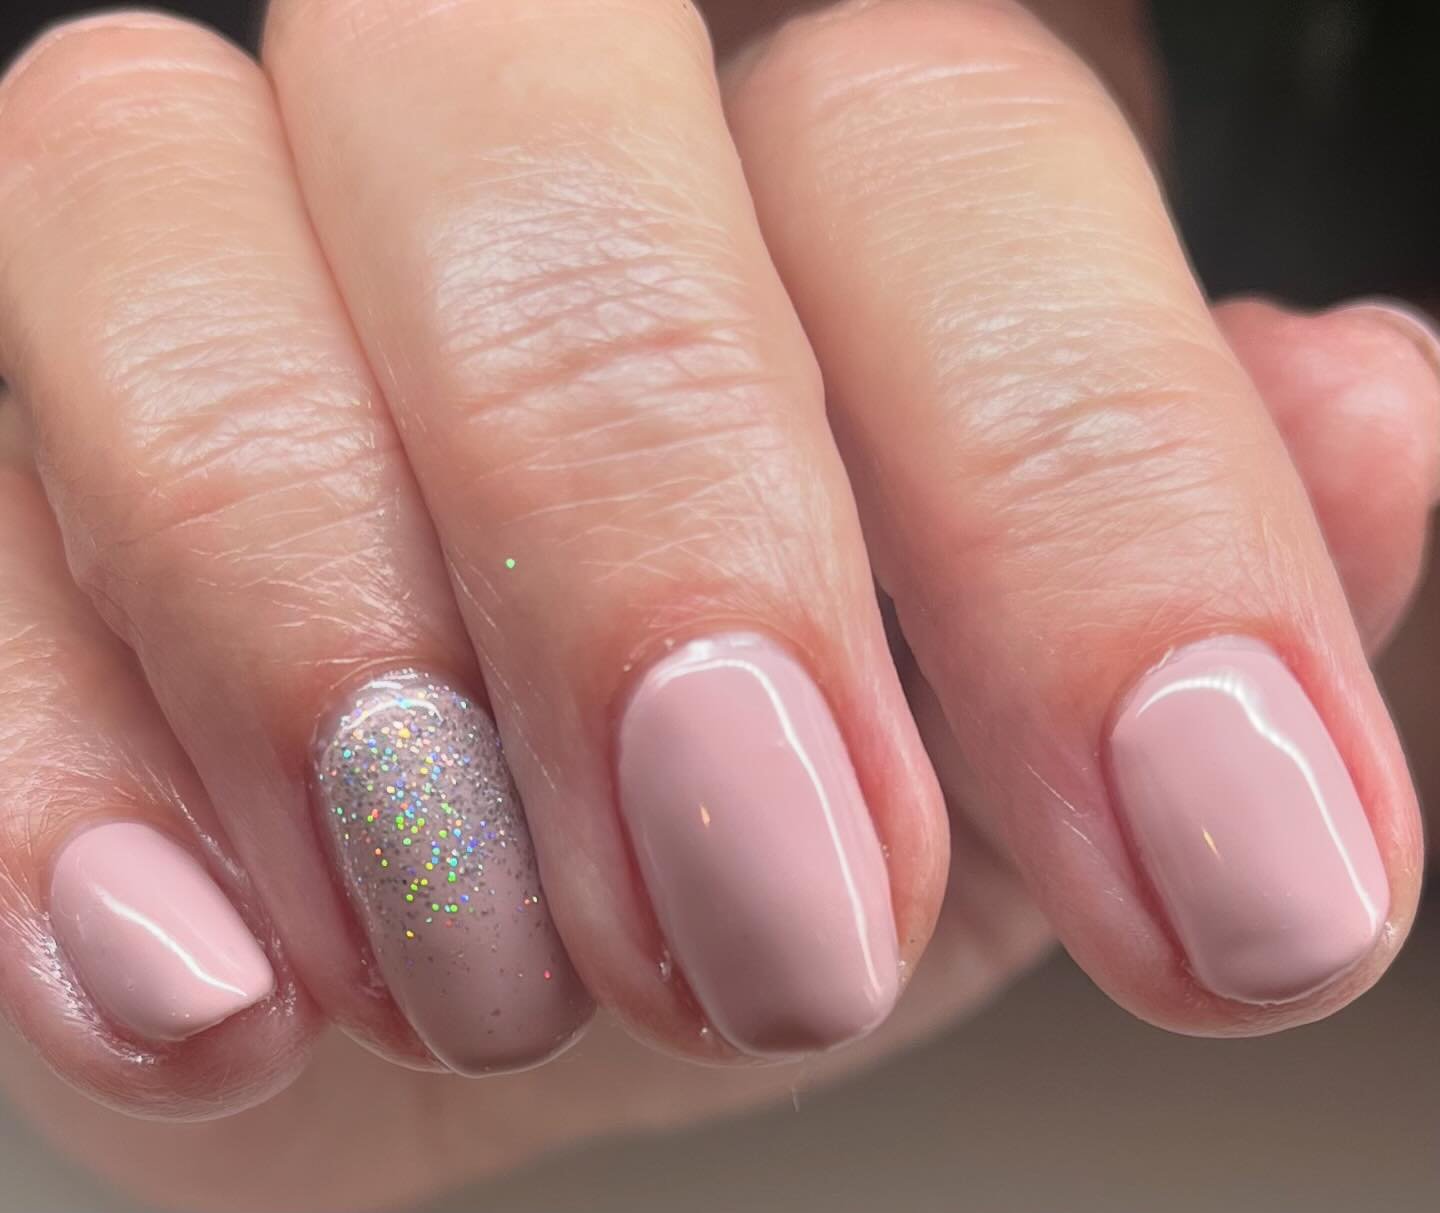 New nails are the best feeling. 🤍
#newnails #clevedonnails #biosculpturenails #nails #healthynails #gels #clanails